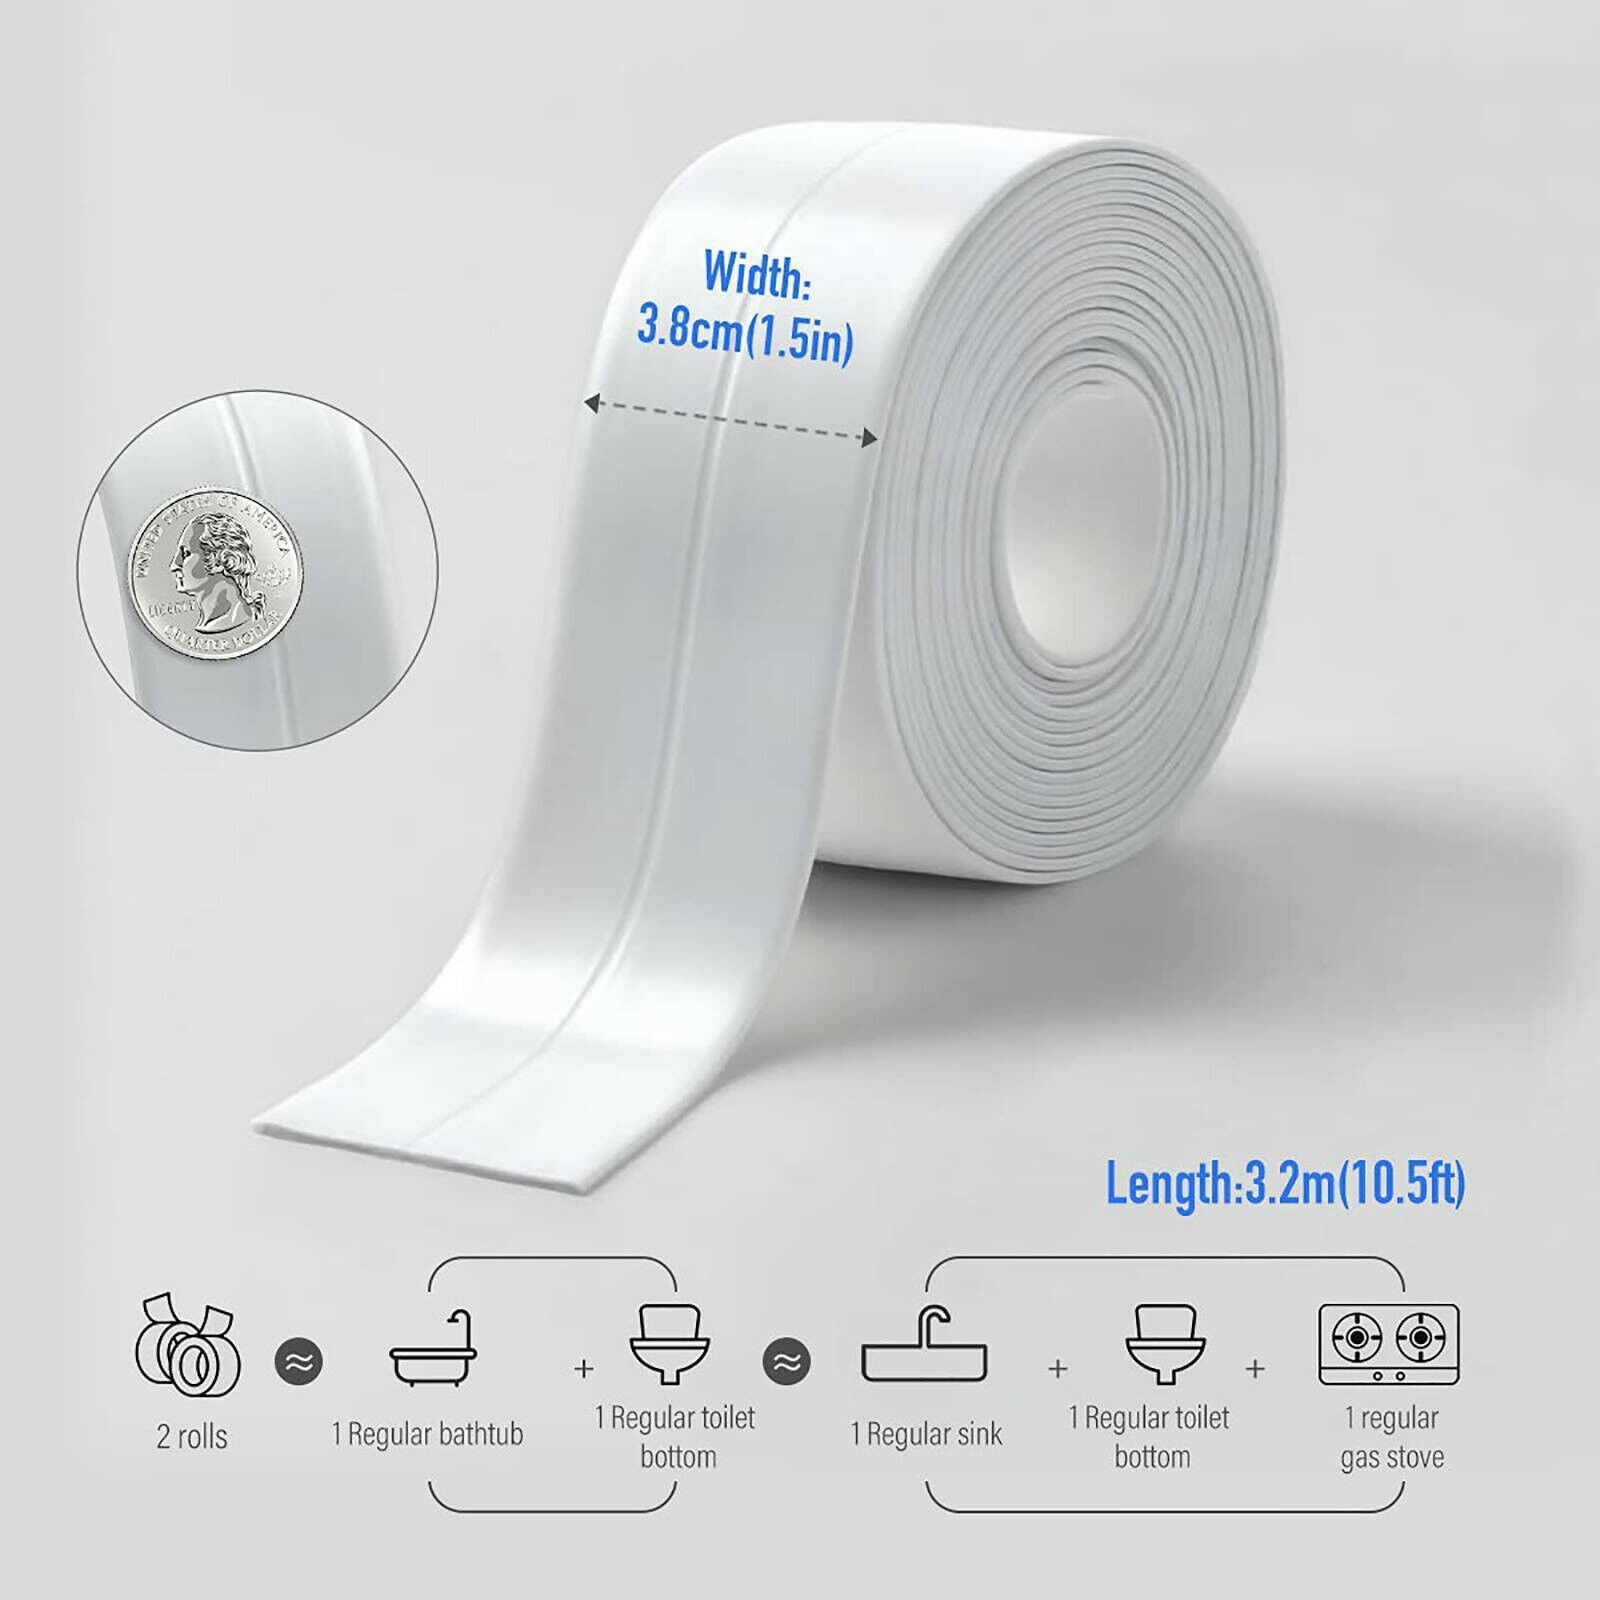 38MM*3.2M Kitchen Corner Sealant Tape Roll Waterproof Adhesive Sink Stove Gap Sticker Tool